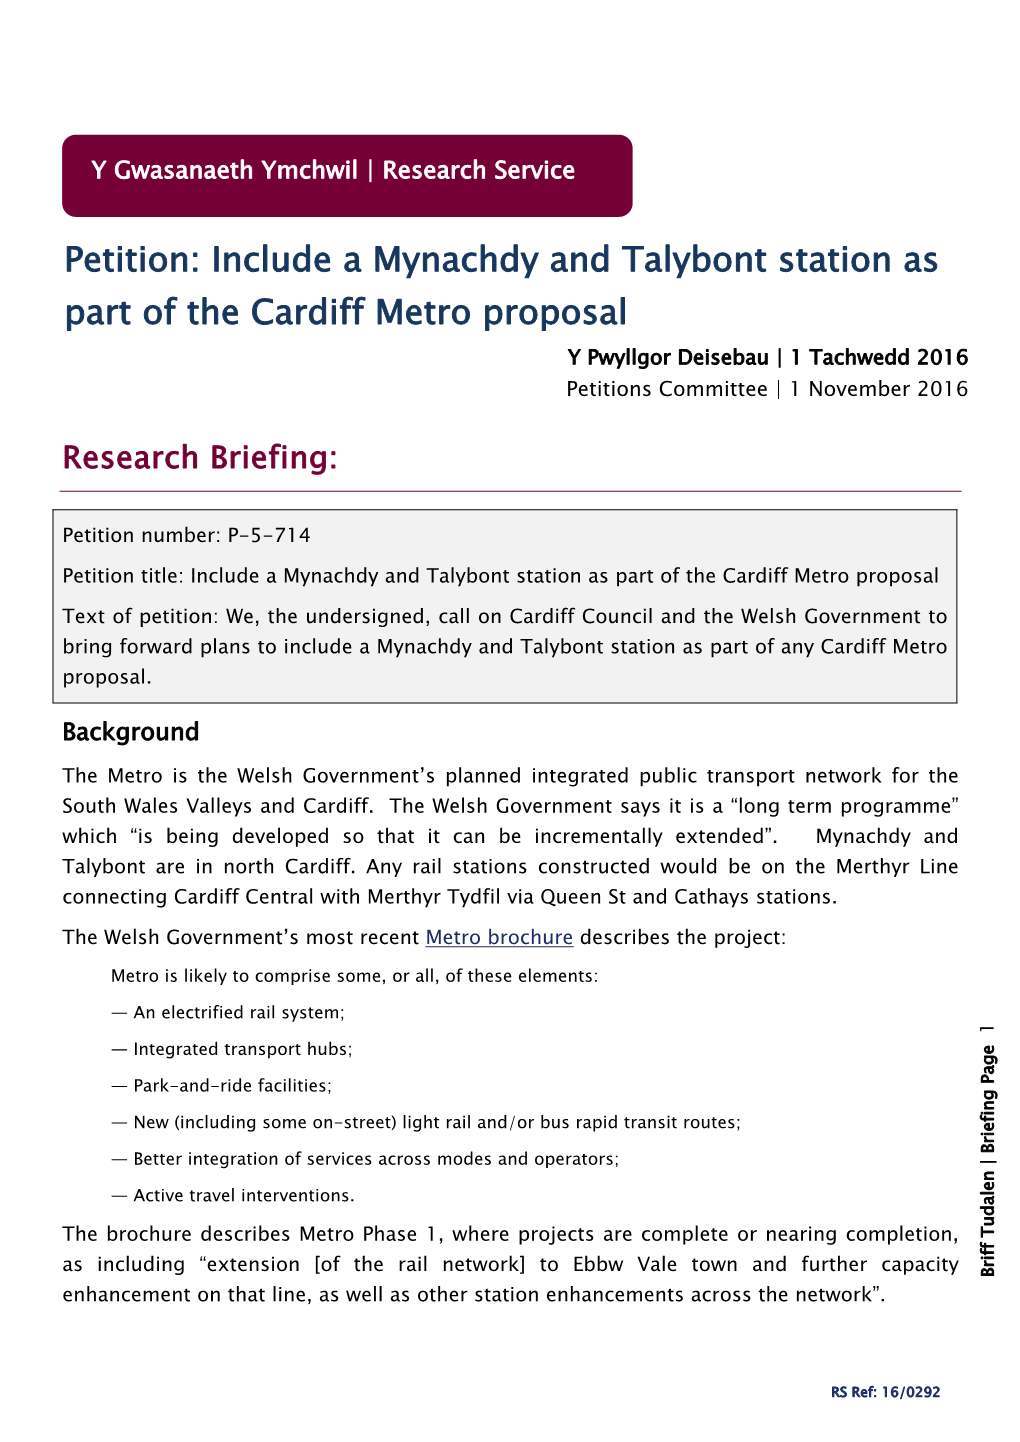 Include a Mynachdy and Talybont Station As Part of the Cardiff Metro Proposal Y Pwyllgor Deisebau | 1 Tachwedd 2016 Petitions Committee | 1 November 2016